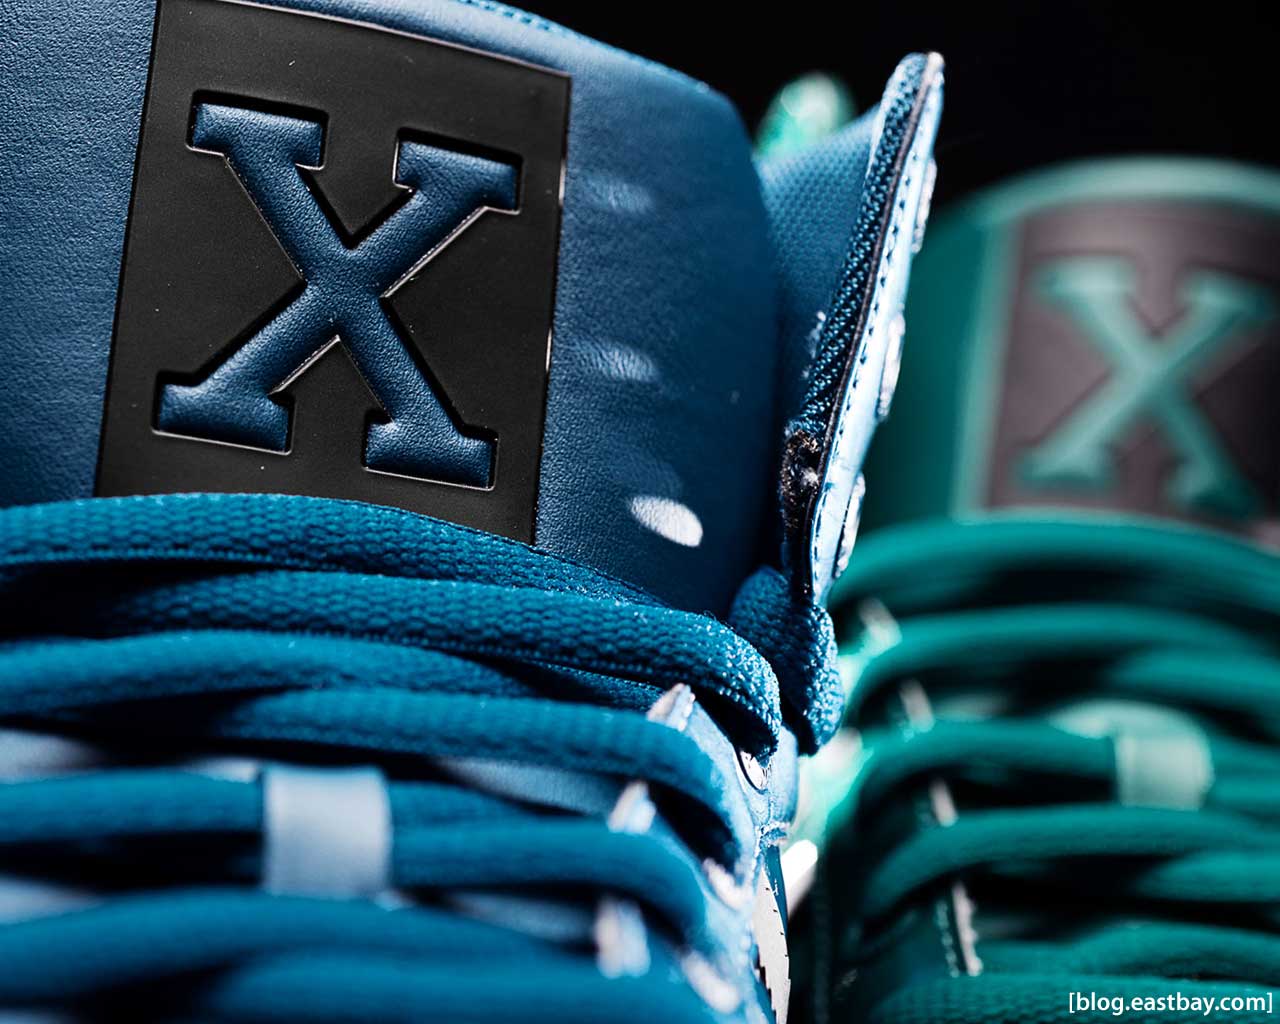 Wallpaper: adidas Originals Top X Sneak Peek | Eastbay Blog